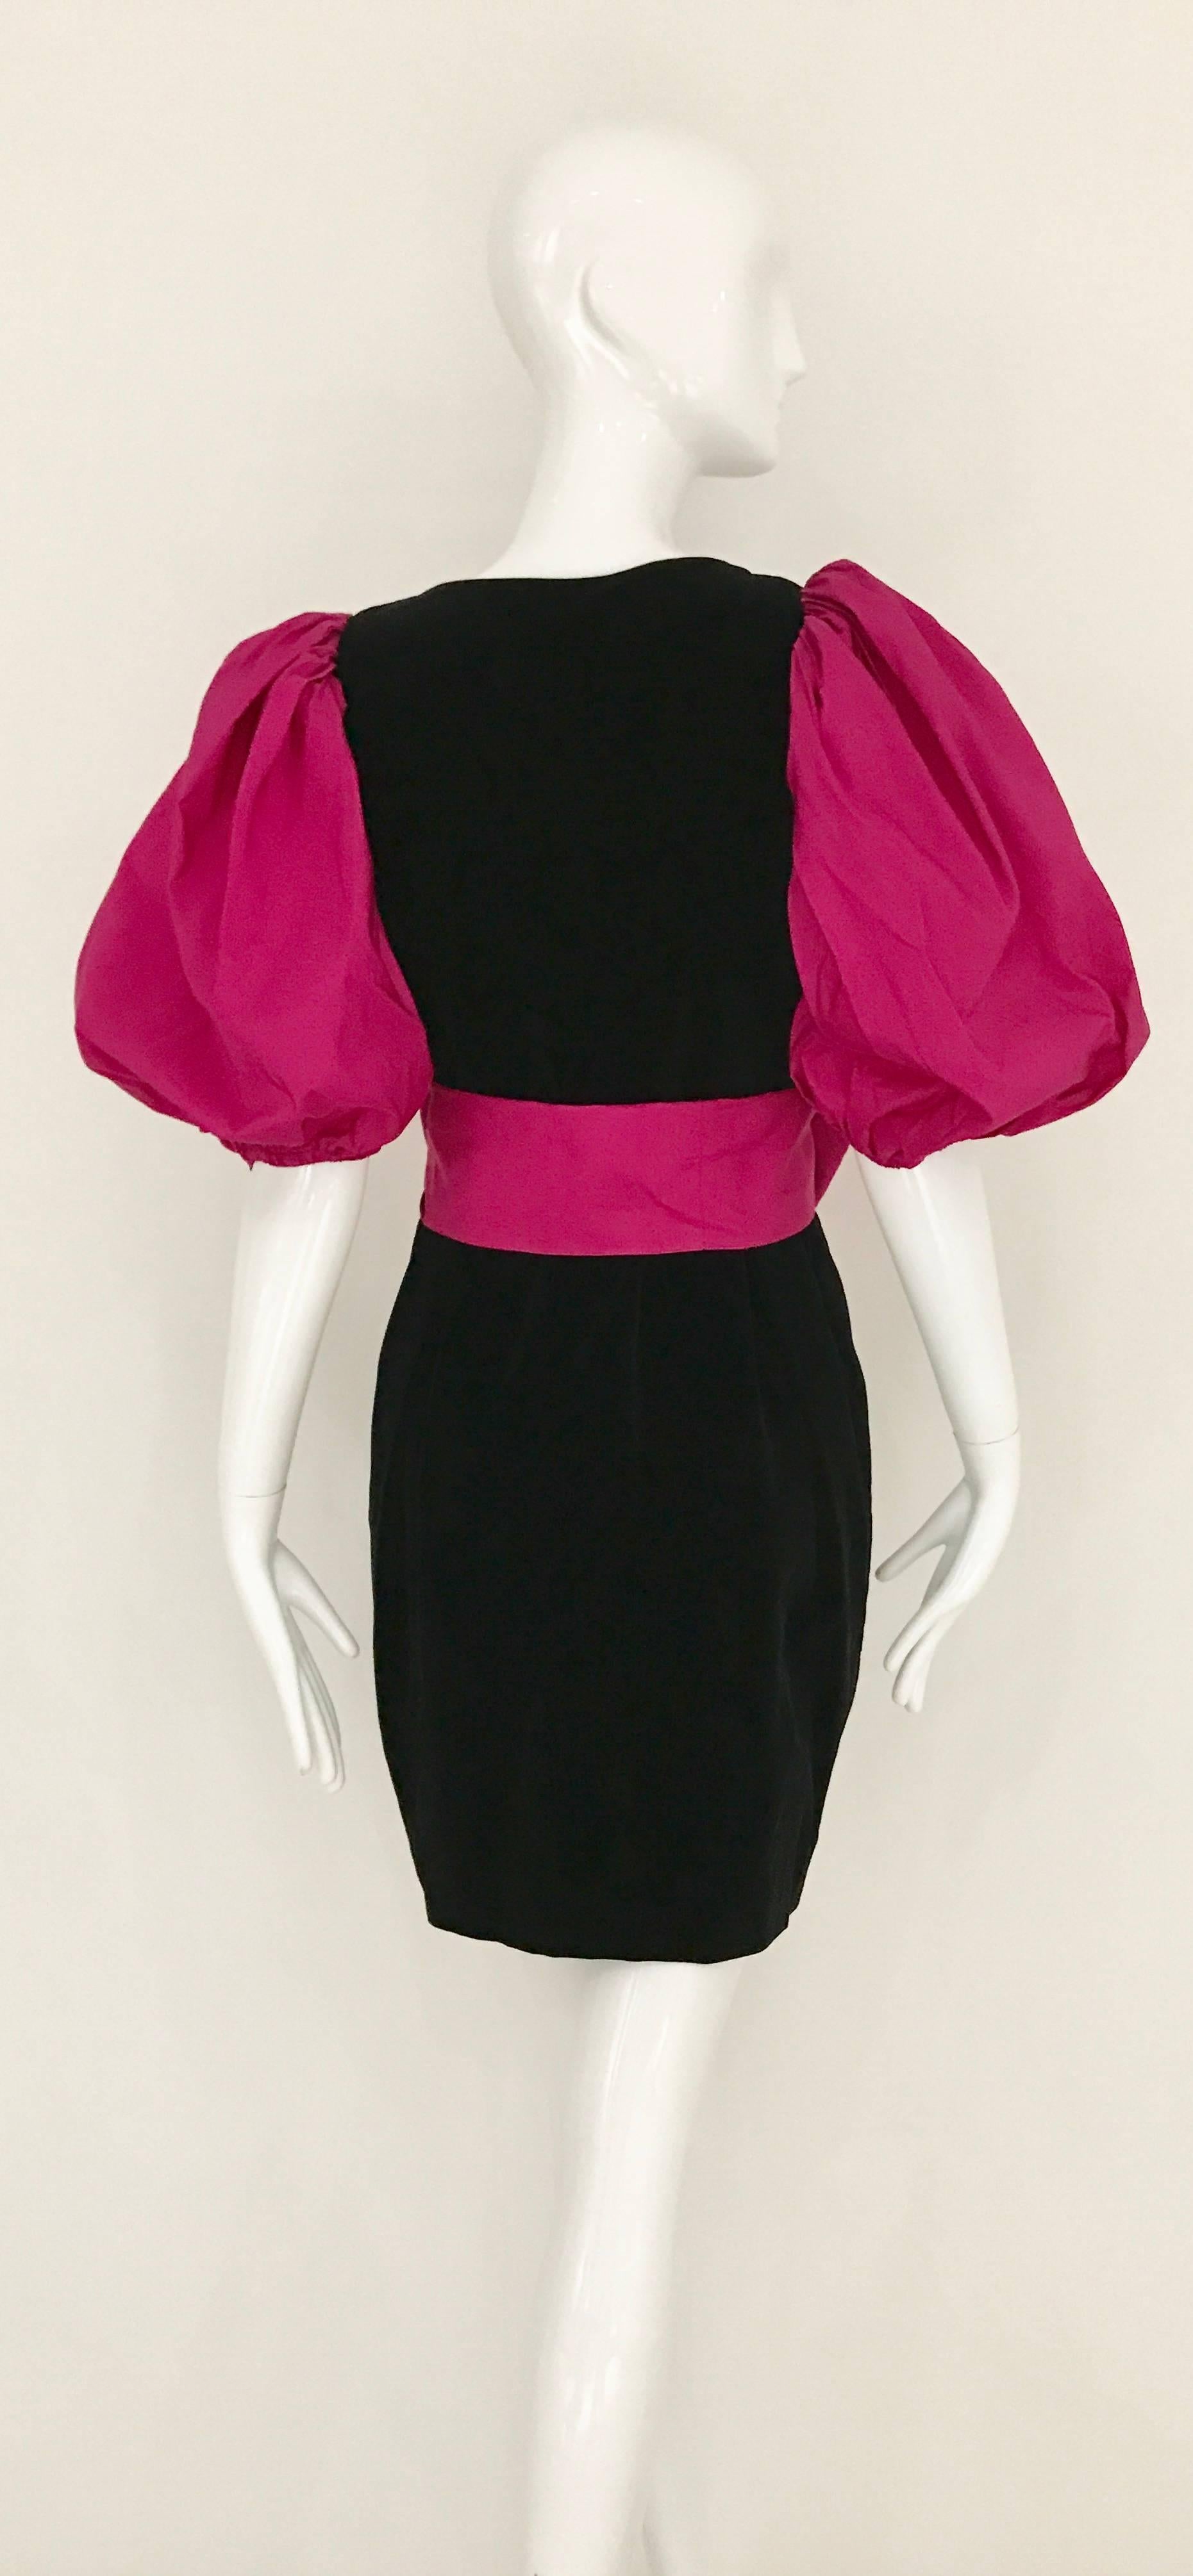 1980s Saint Laurent Plunging Neckline Velvet Dress with Dramatic Pink sleeves 1